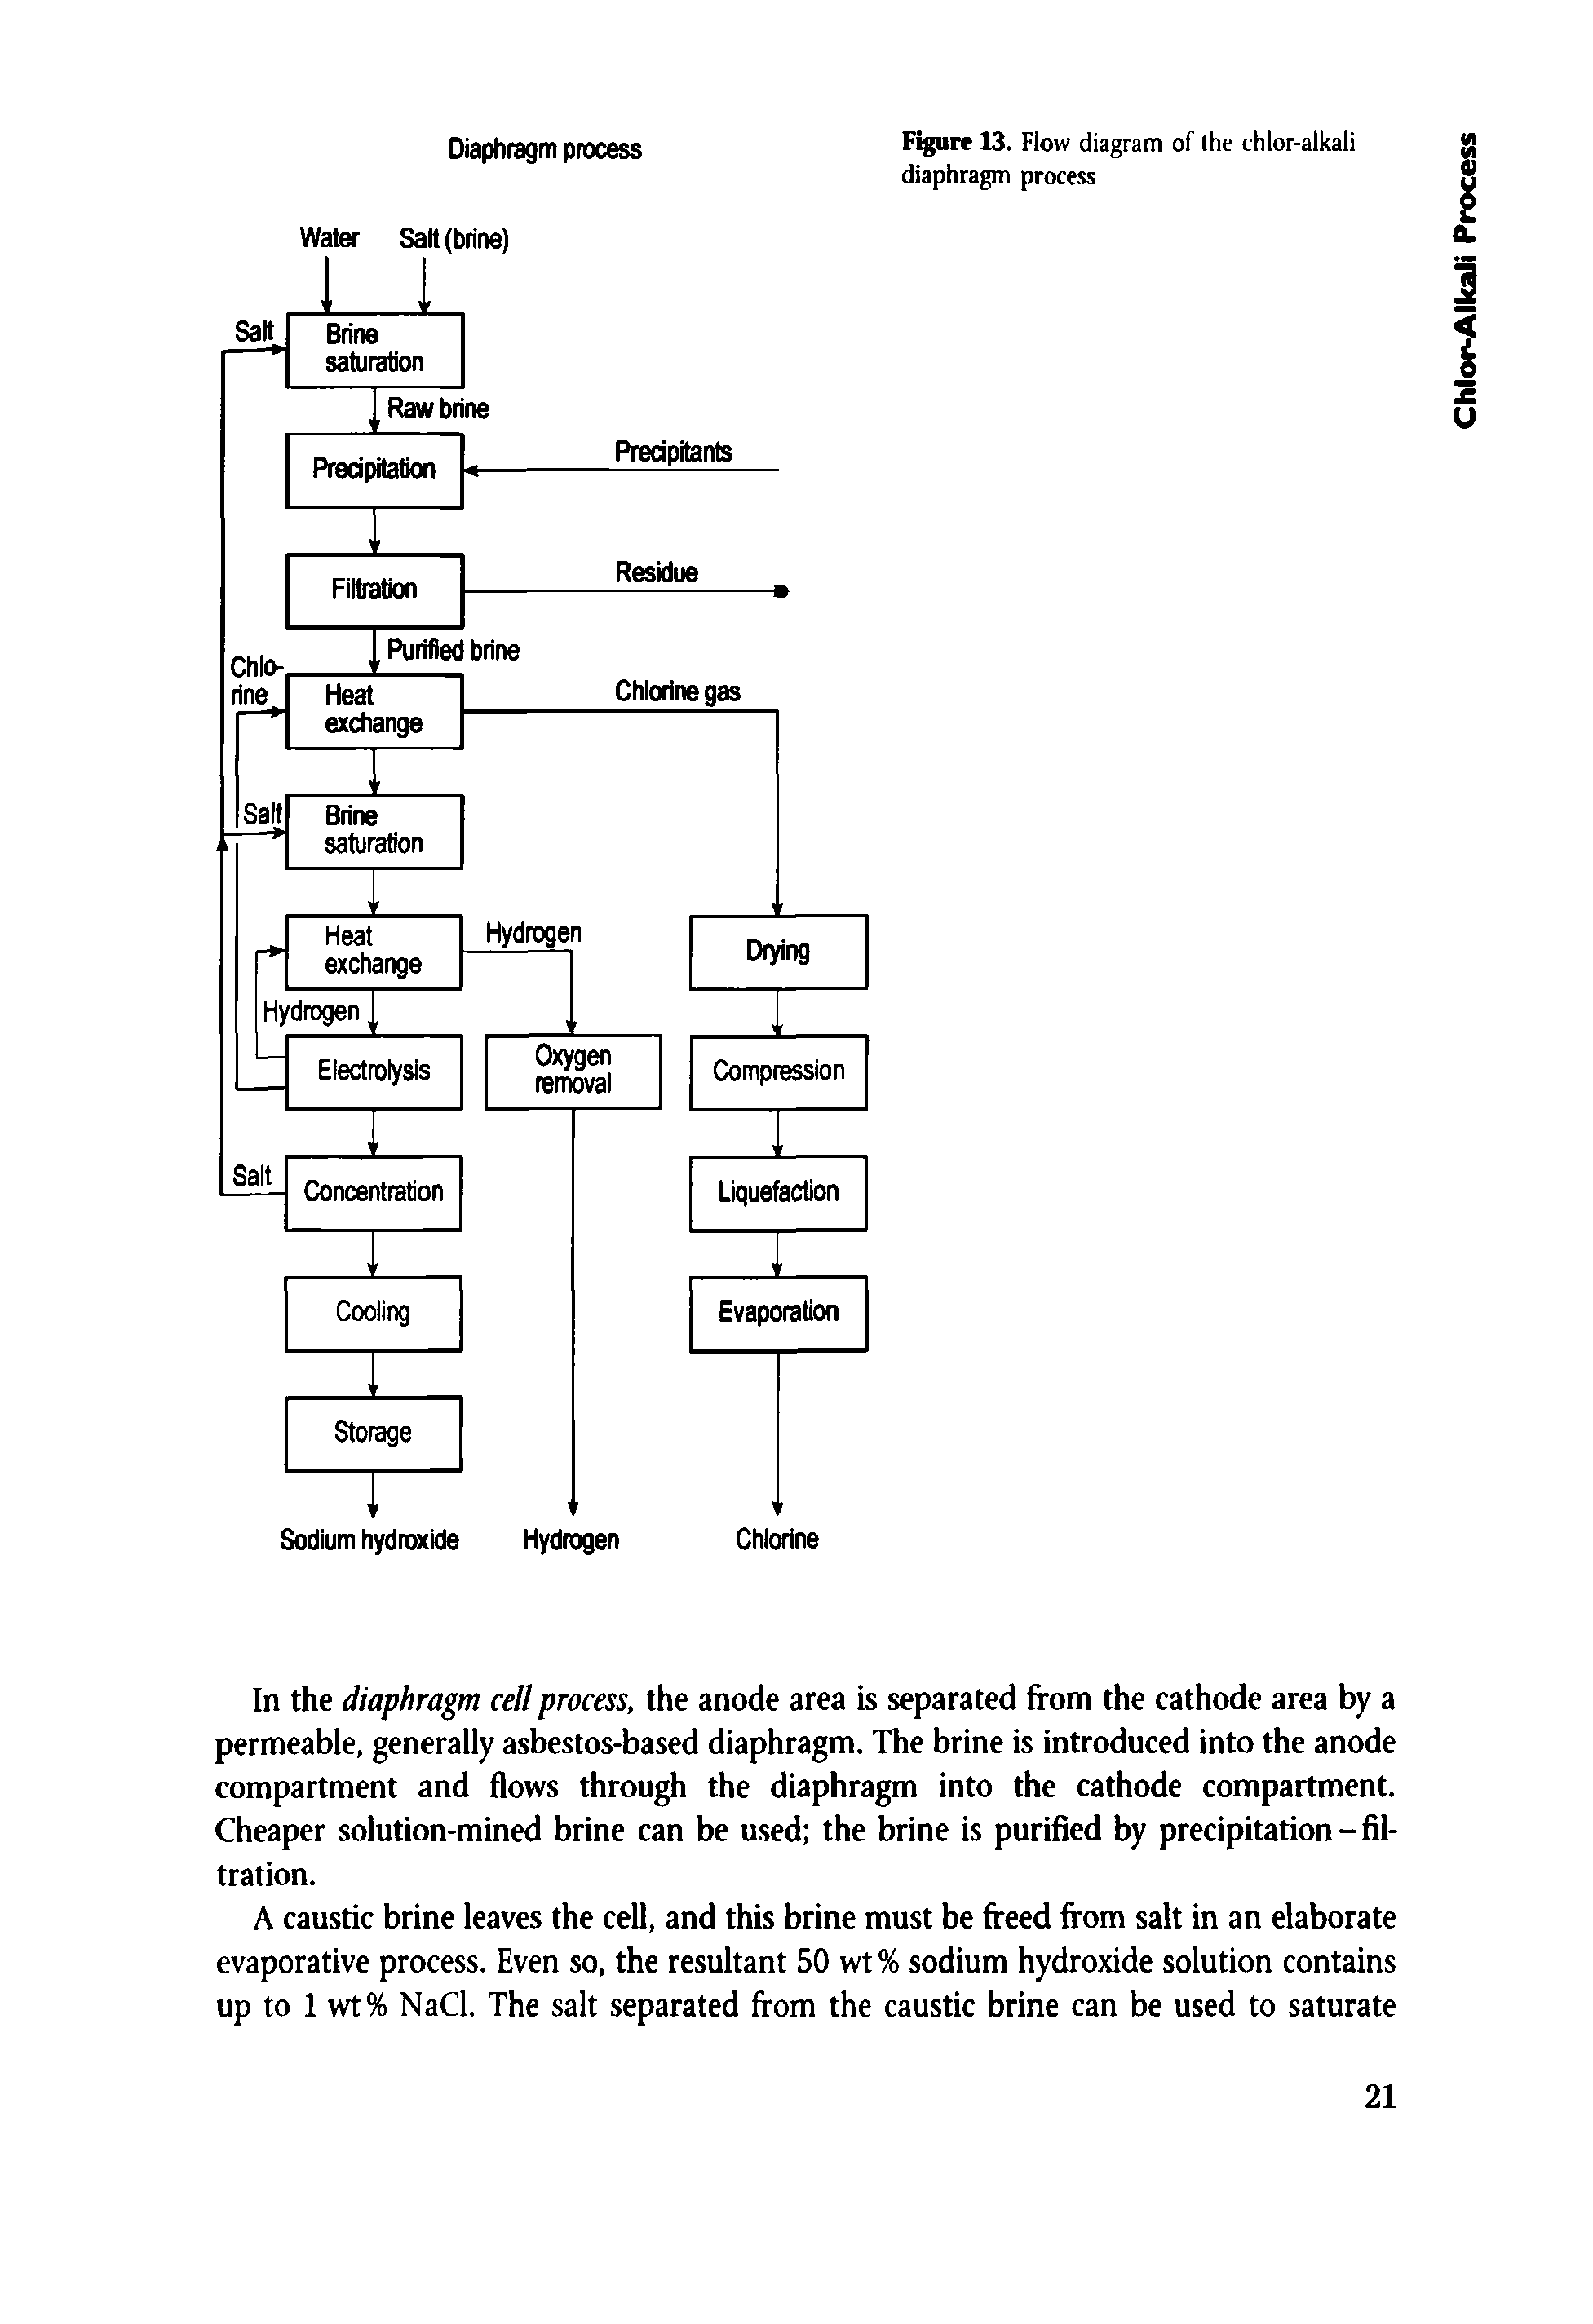 Figure 13. Flow diagram of the chlor-alkali diaphragm process...